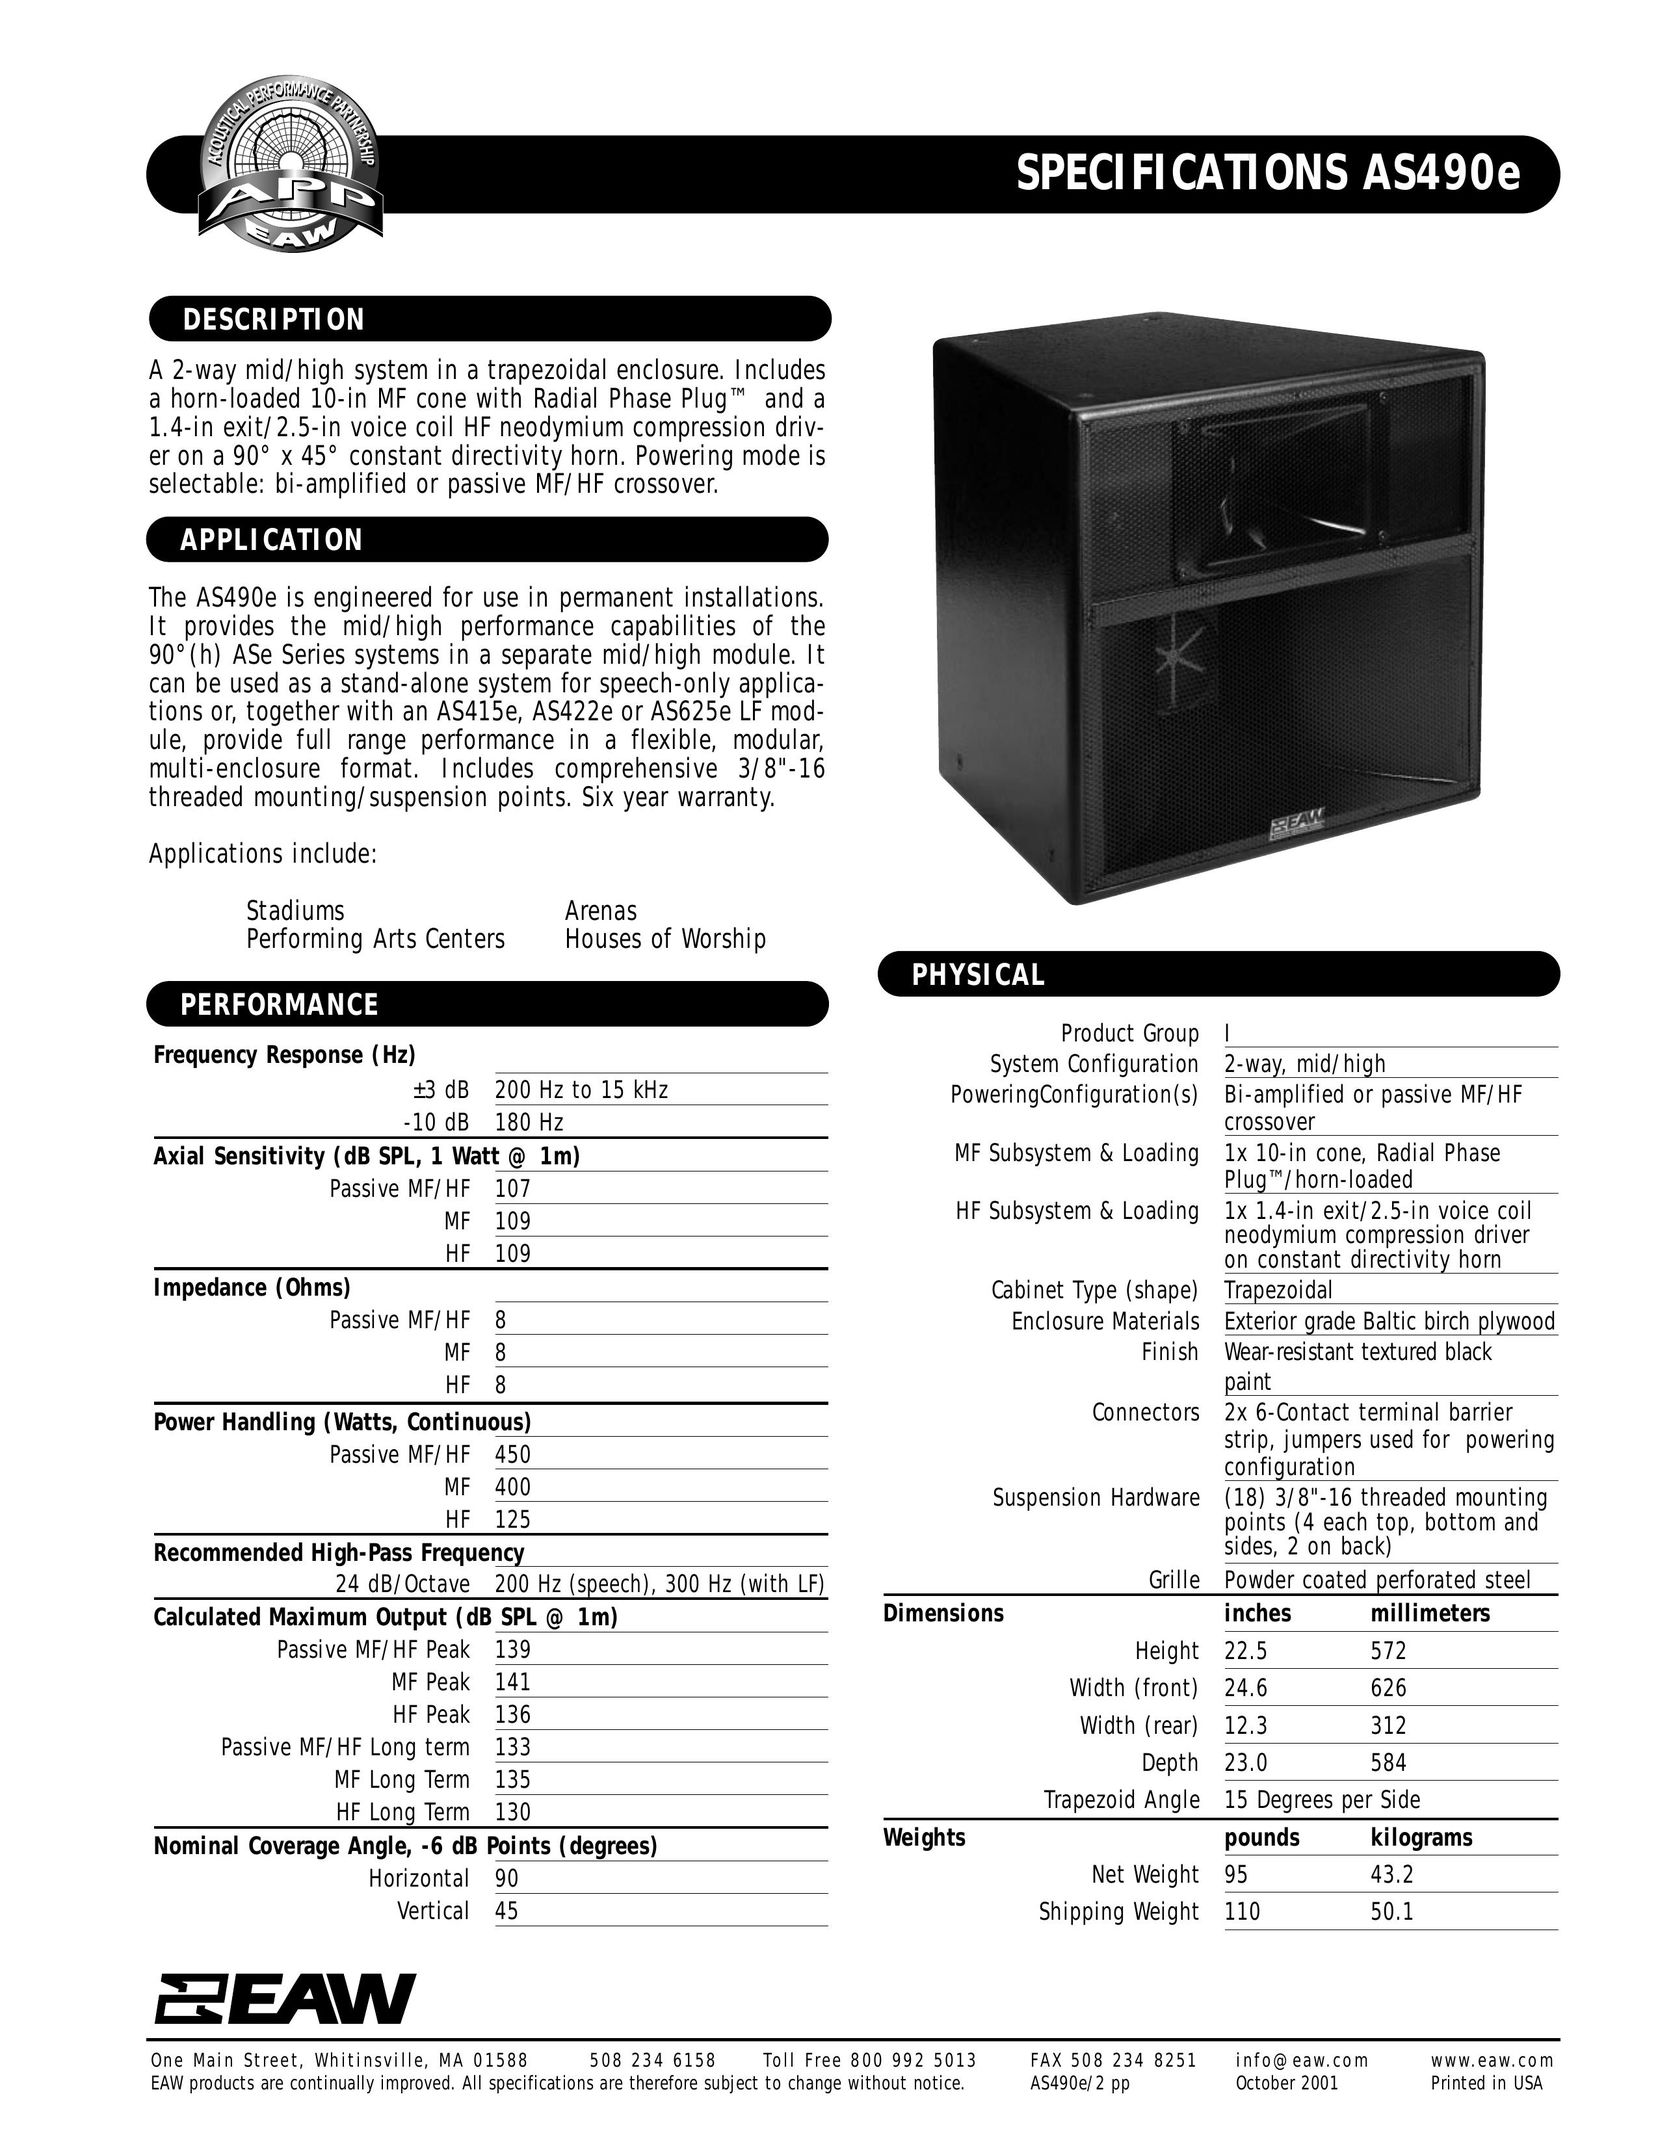 EAW AS490e Portable Speaker User Manual